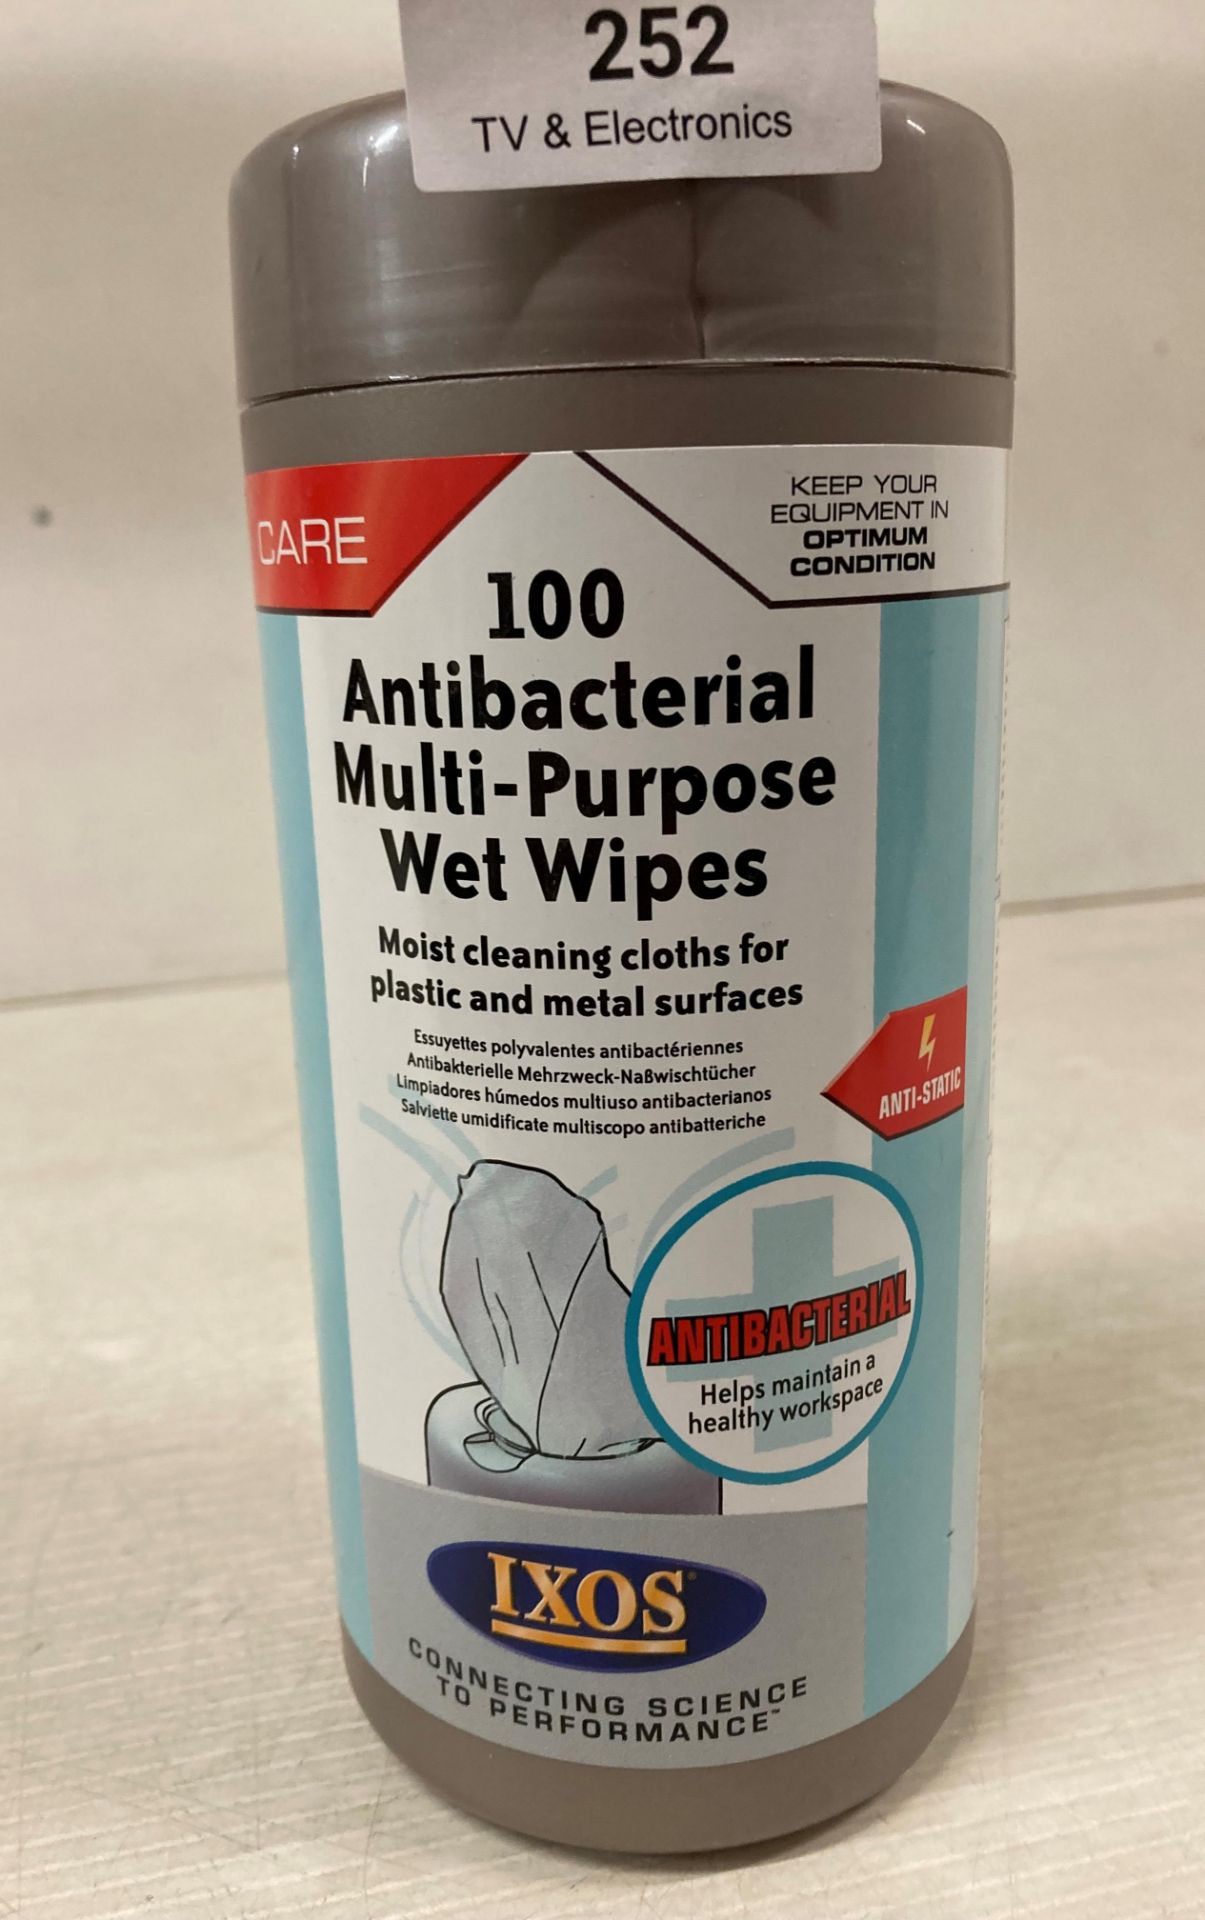 Contents to crate - 47 x tubs of IXOS Antibacterial multi-purpose wet wipes (G08 FLOOR)